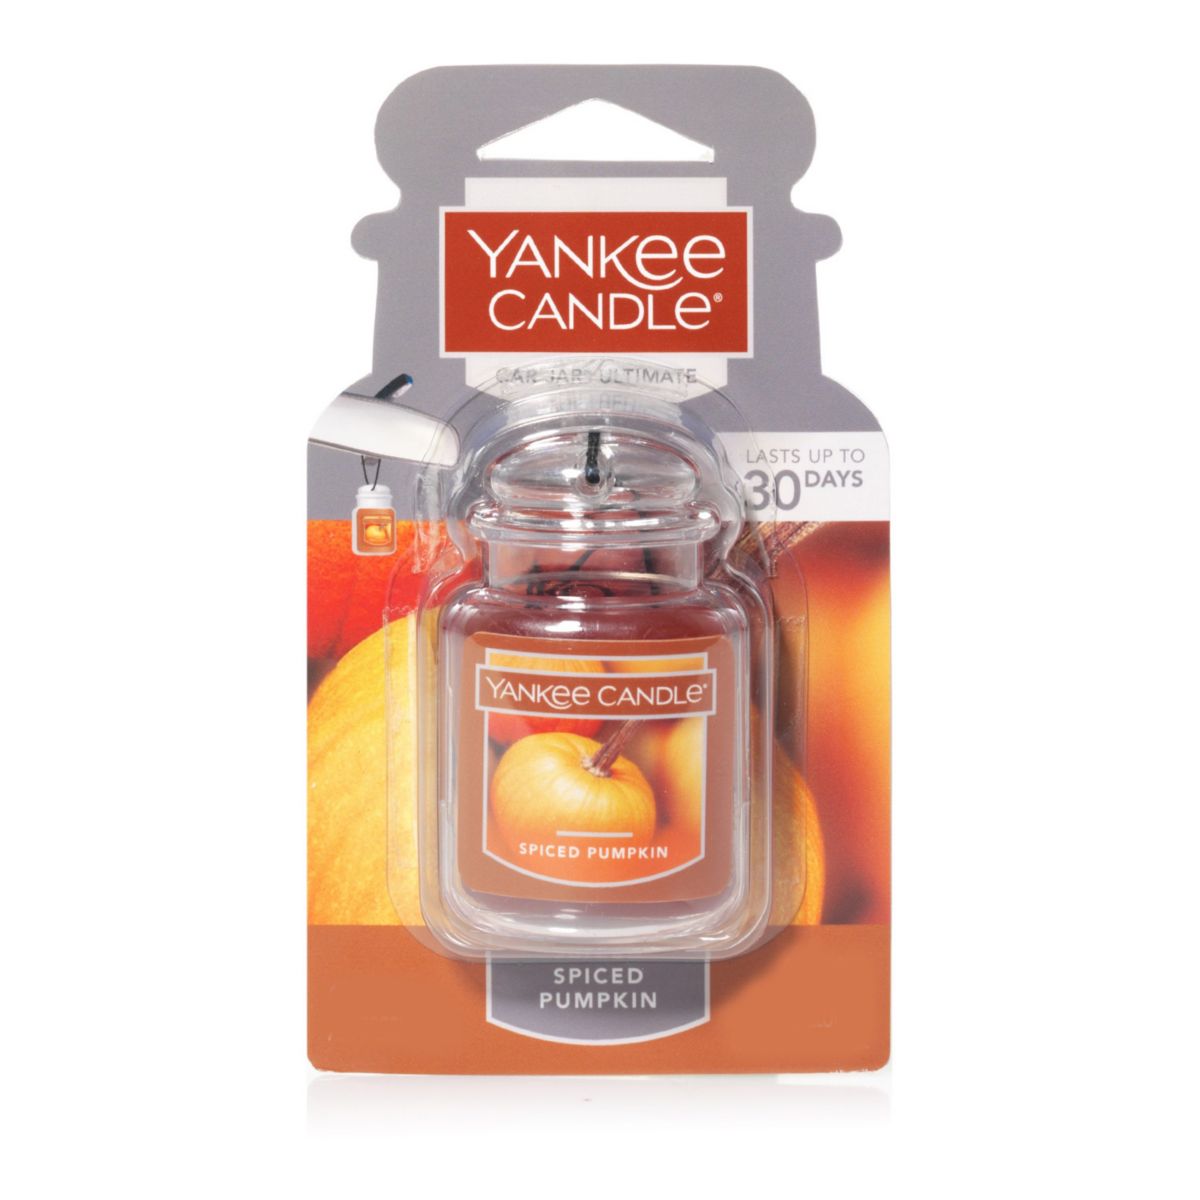 Yankee Candle Spiced Pumpkin Car Jar Ultimate Yankee Candle